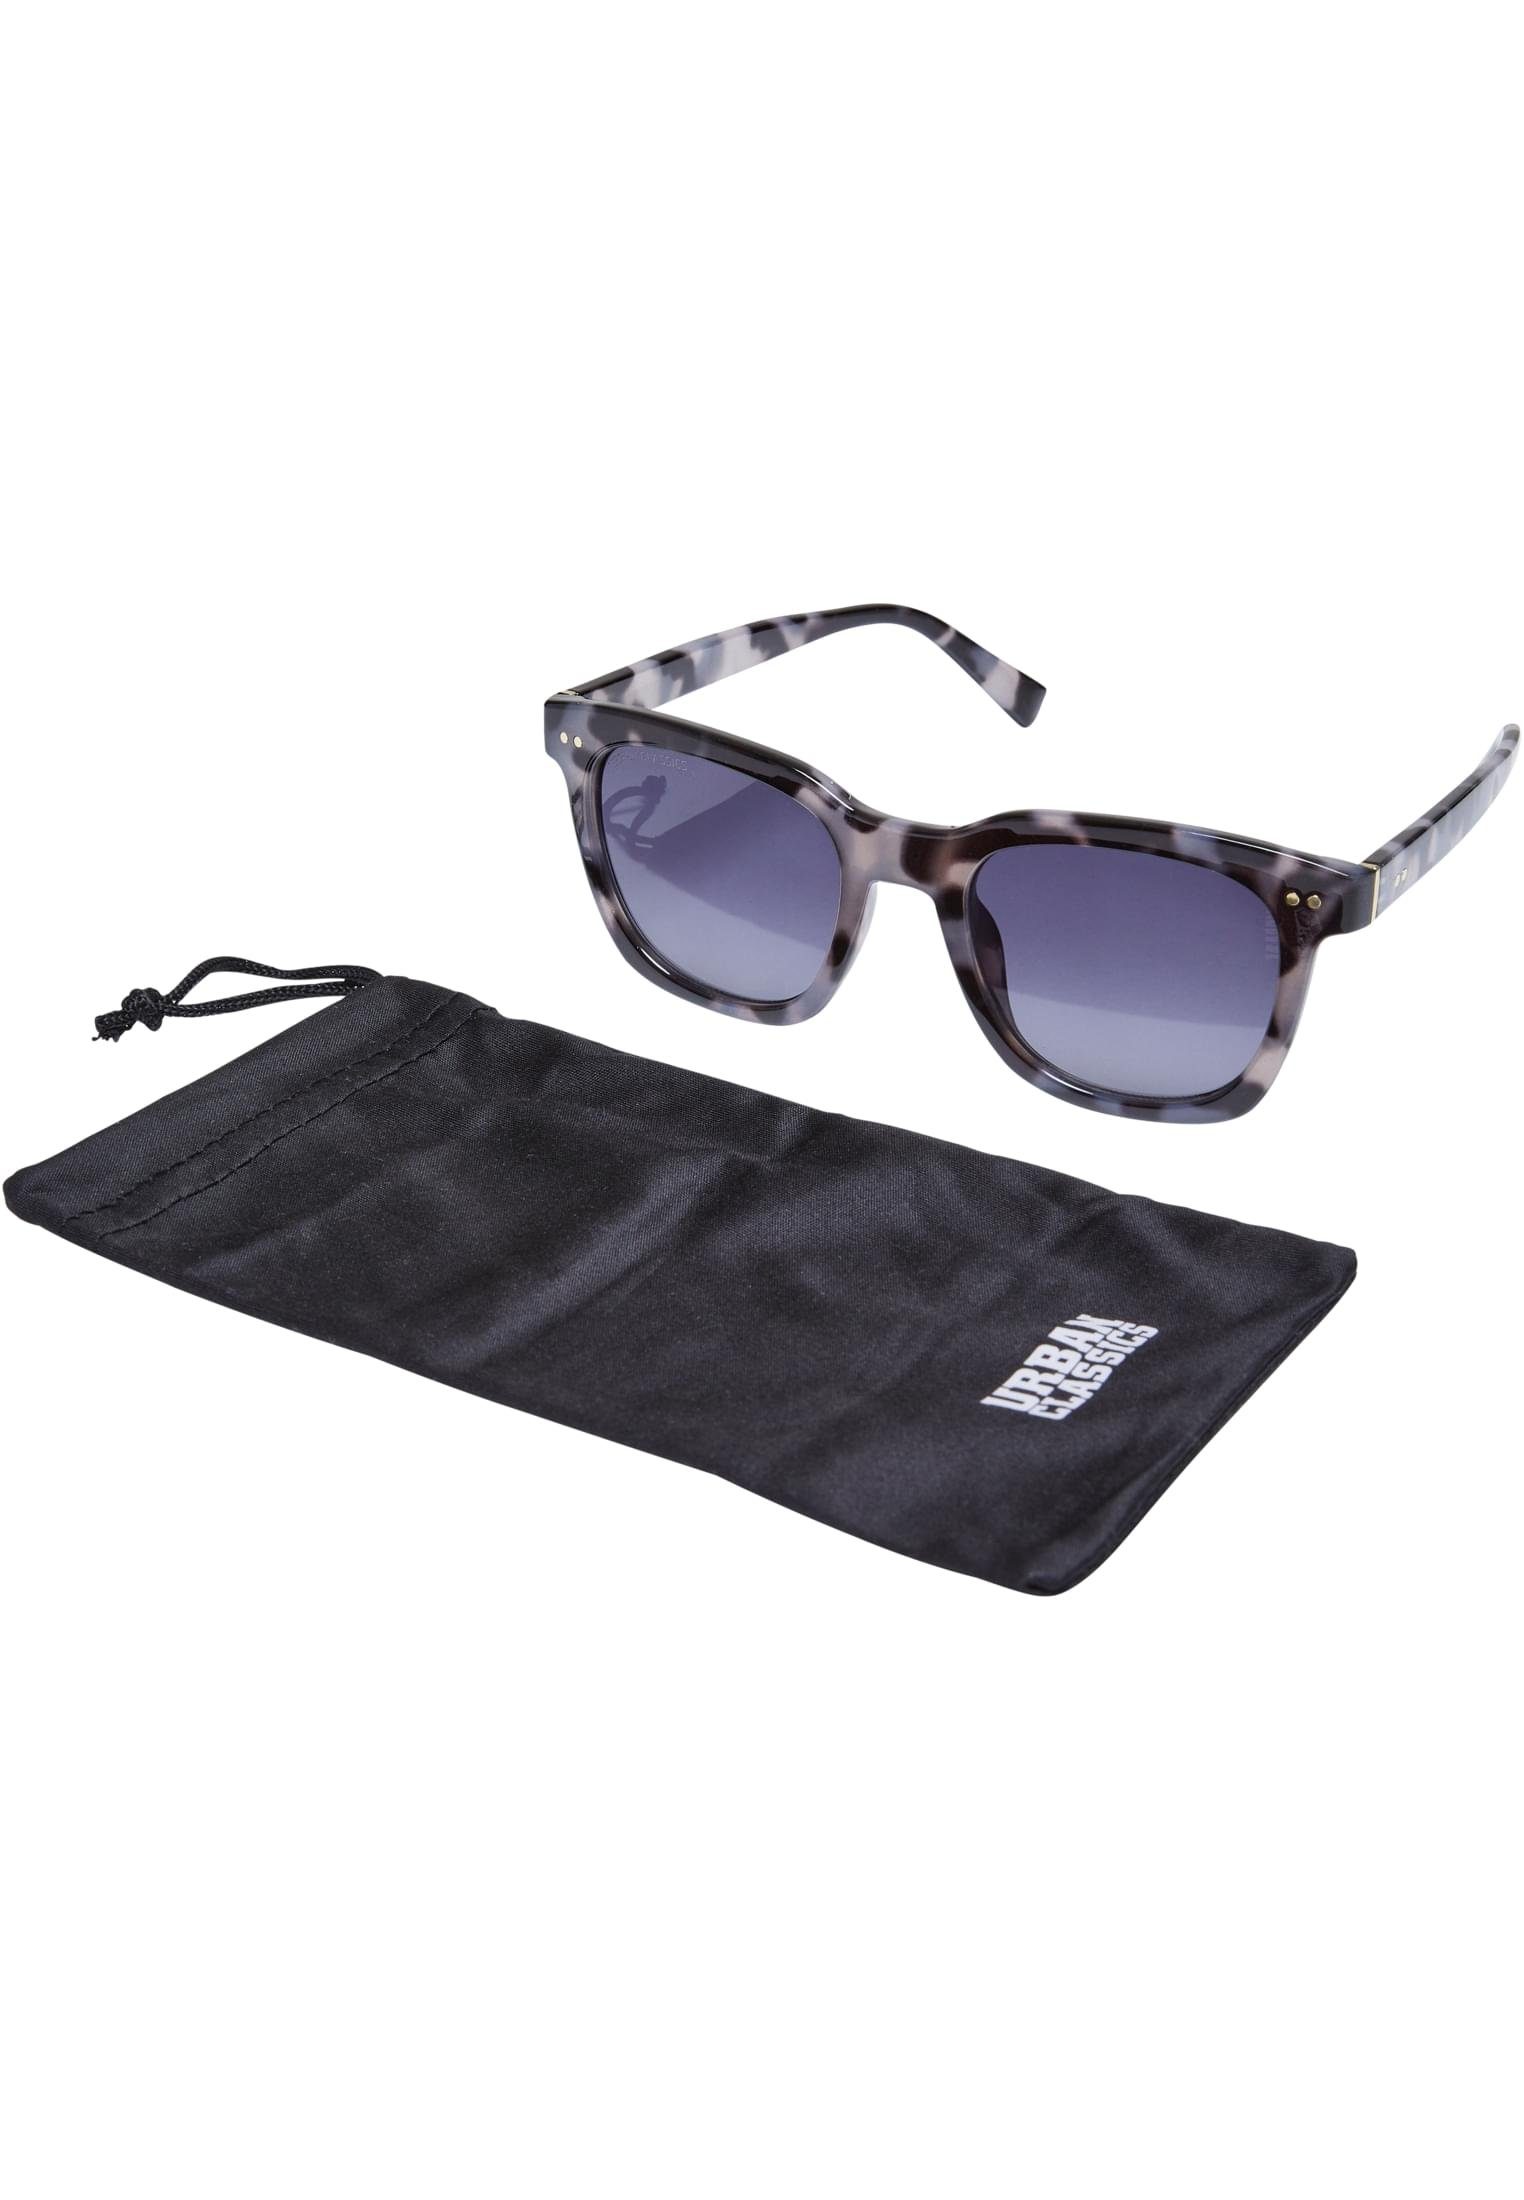 Sunglasses Sonnenbrille amber/black Naples CLASSICS Unisex URBAN